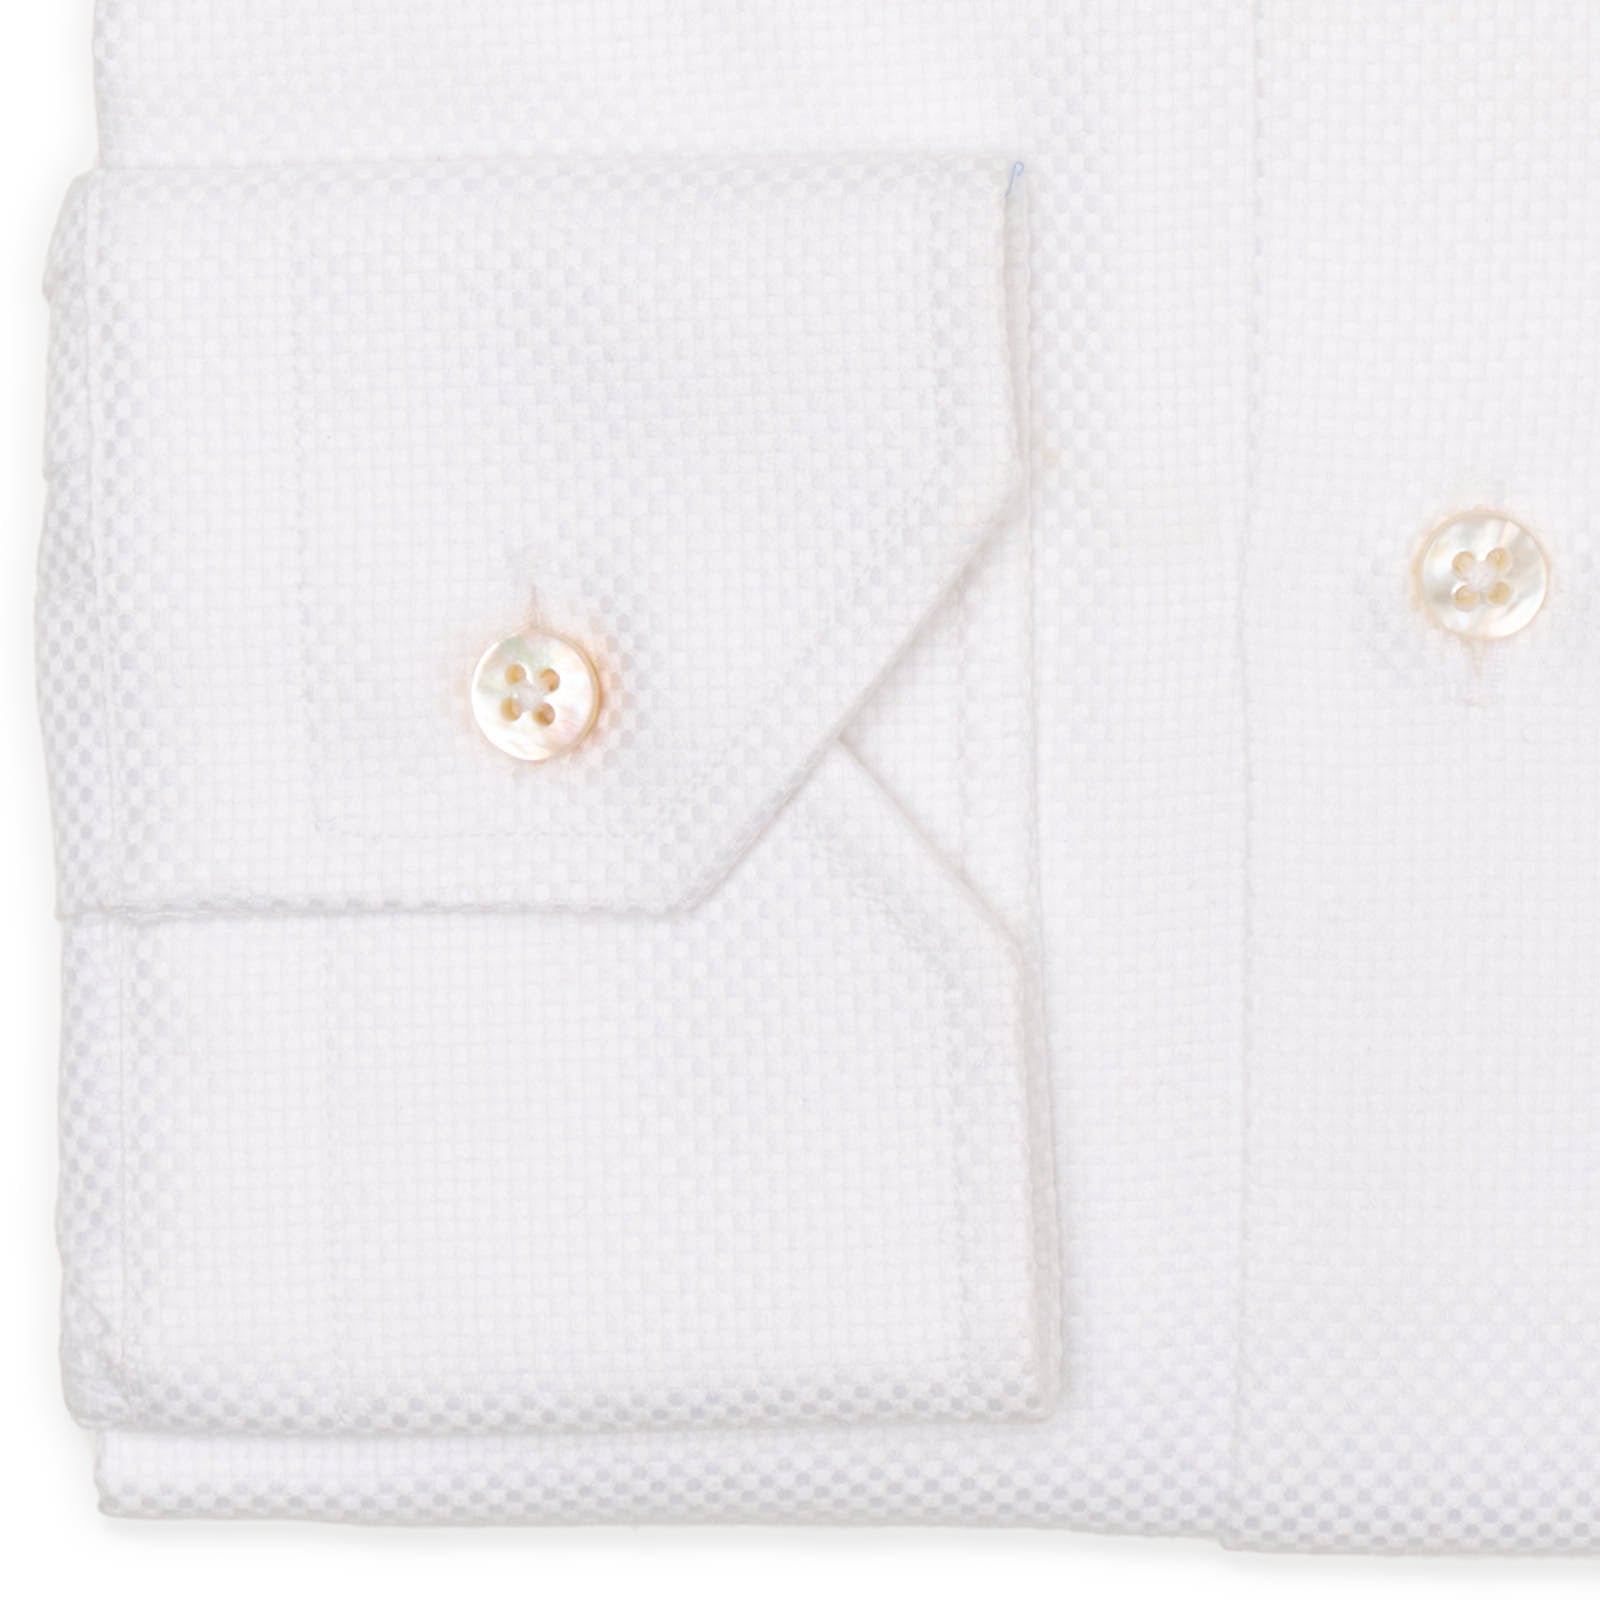 VANNUCCI Milano White Cotton Royal Oxford Dress Shirt EU 38 NEW US 15